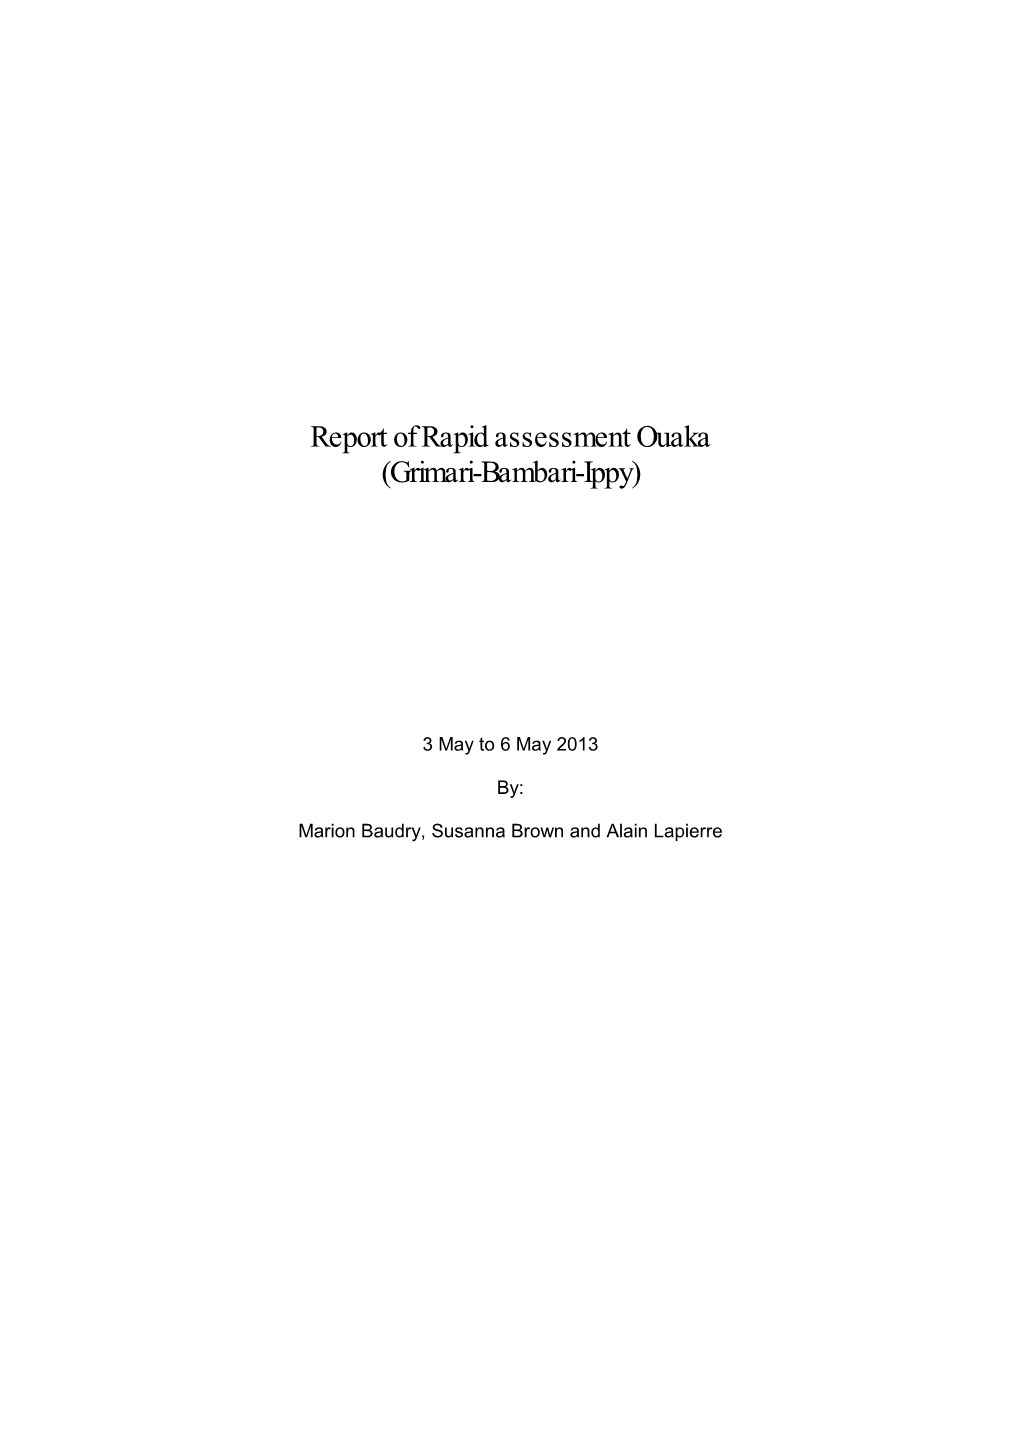 CAR Rapid Assessment Ouaka May2013.Pdf